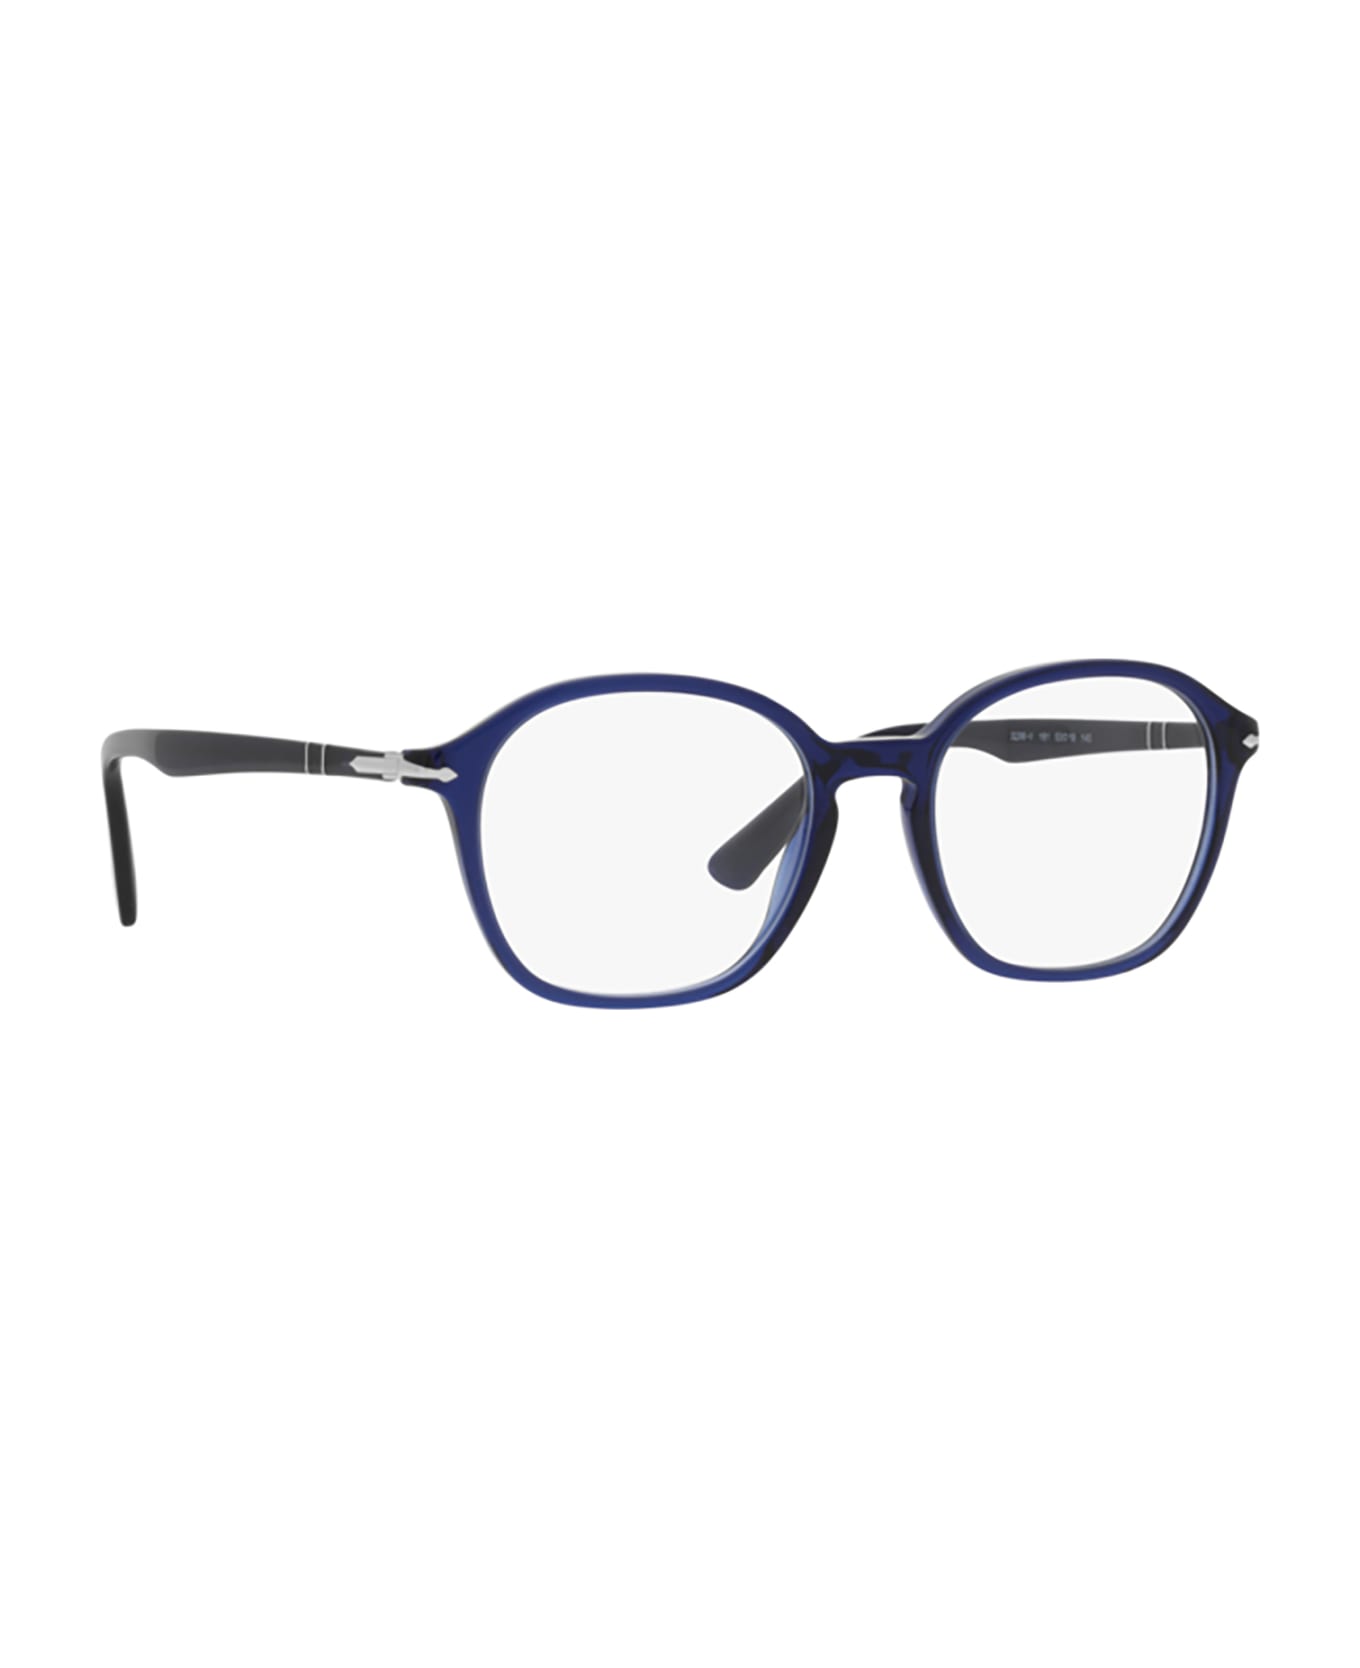 Persol Po3296v Blue Glasses - Blue